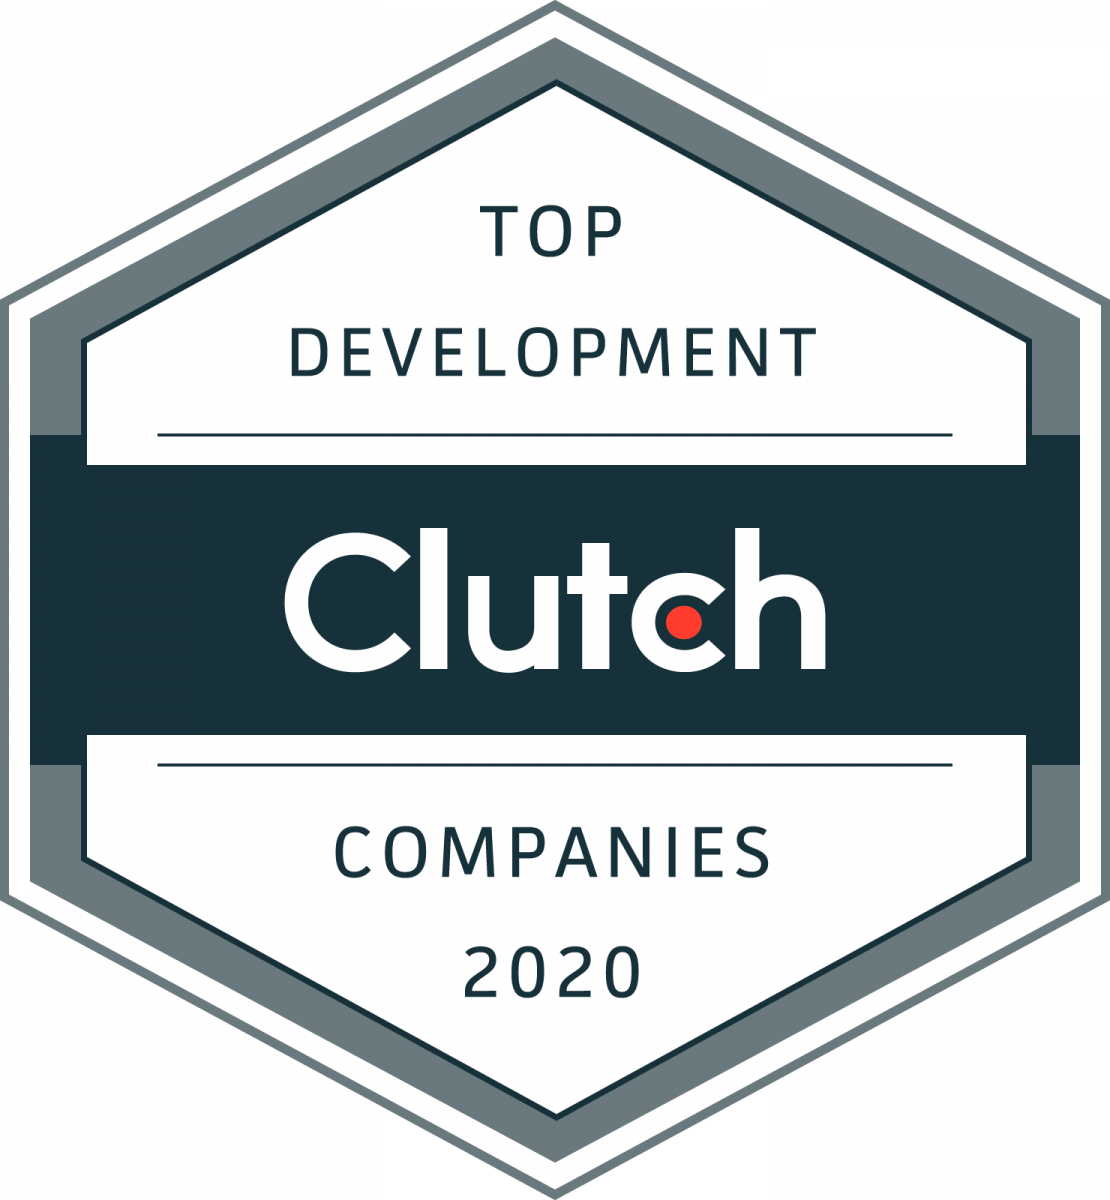 Top Development Companies